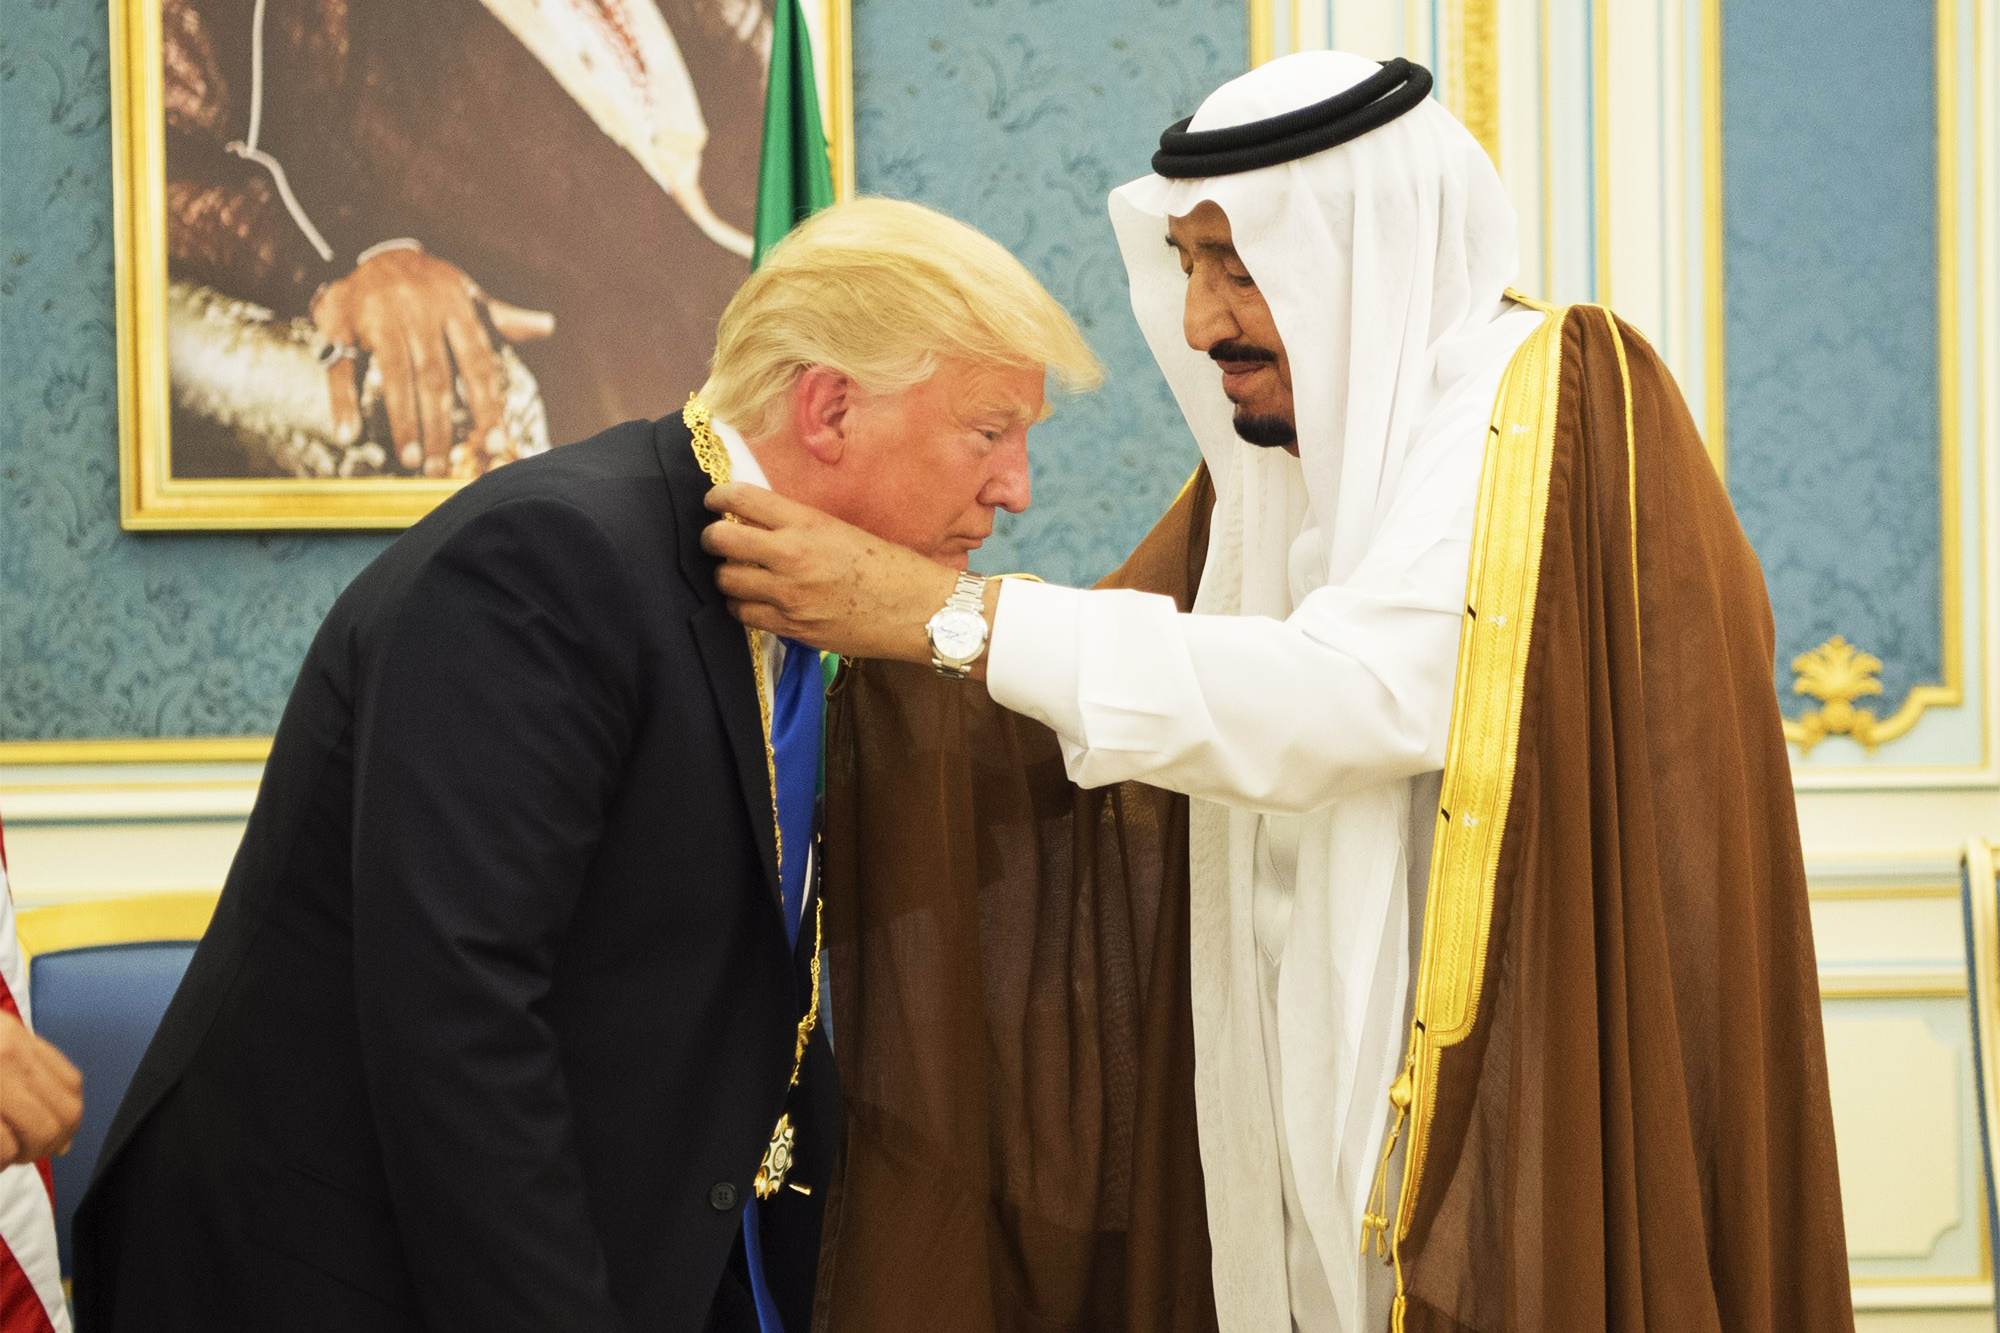 Saudi Arabia's King Salman bin Abdulaziz Al Saud presents a state medal to Donald Trump at Al-Yamamah Palace in Riyadh, Saudi Arabia, on May 20, 2017.